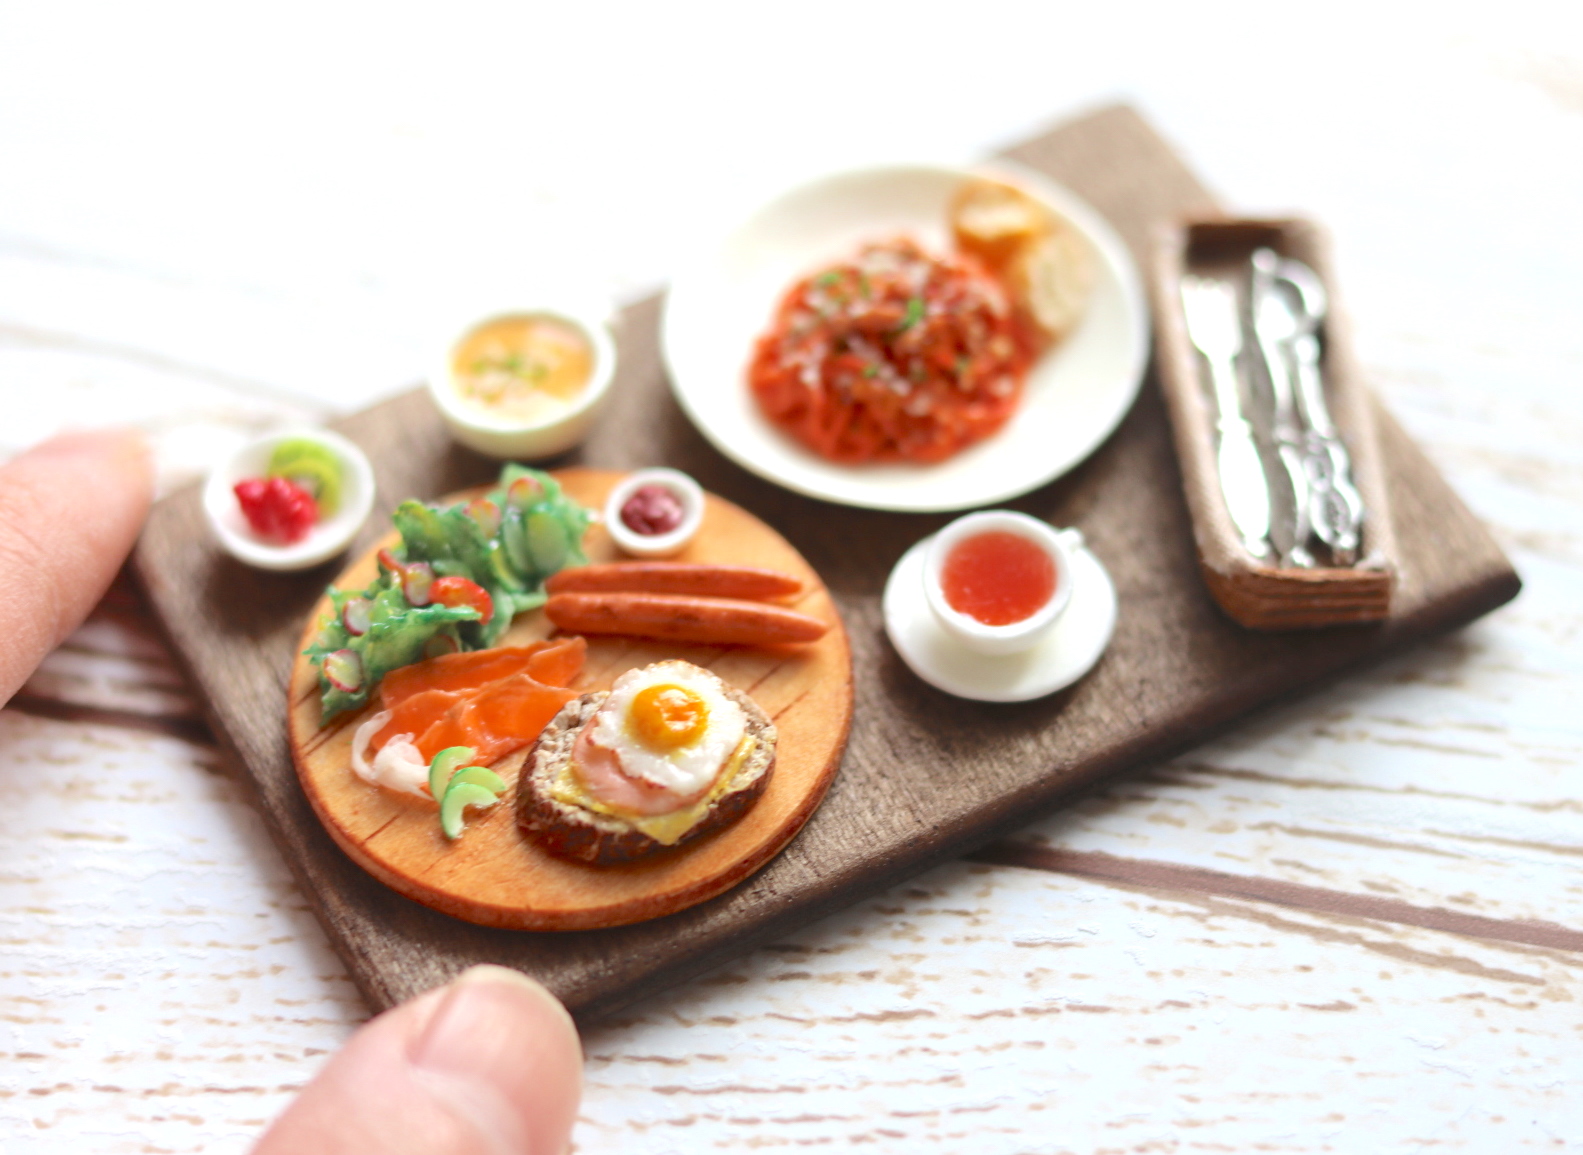 A Little Bite of Japan: The World of Miniature Food Models | RESOBOX